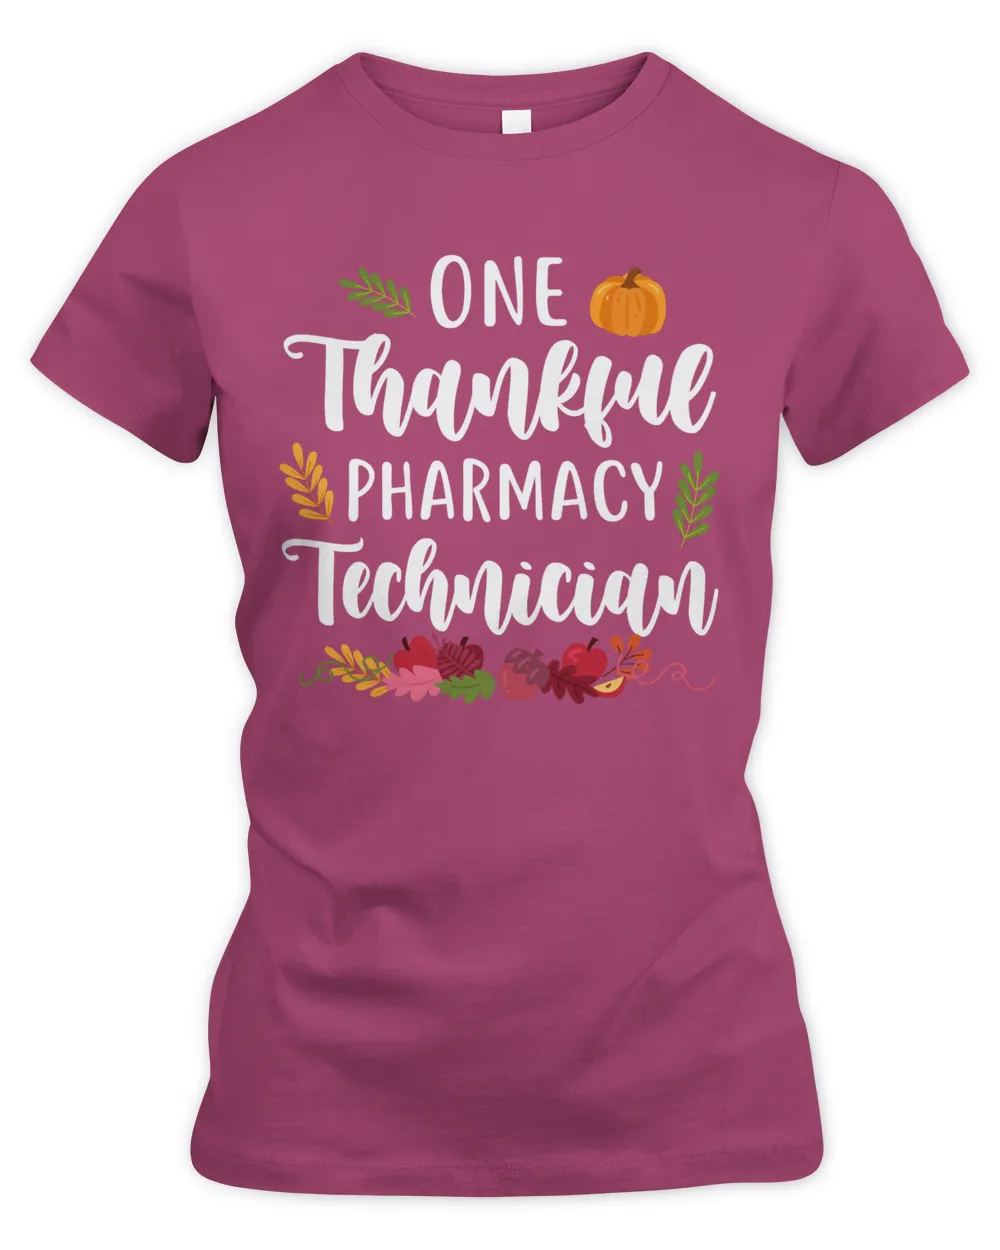 One thankful pharmacy technician